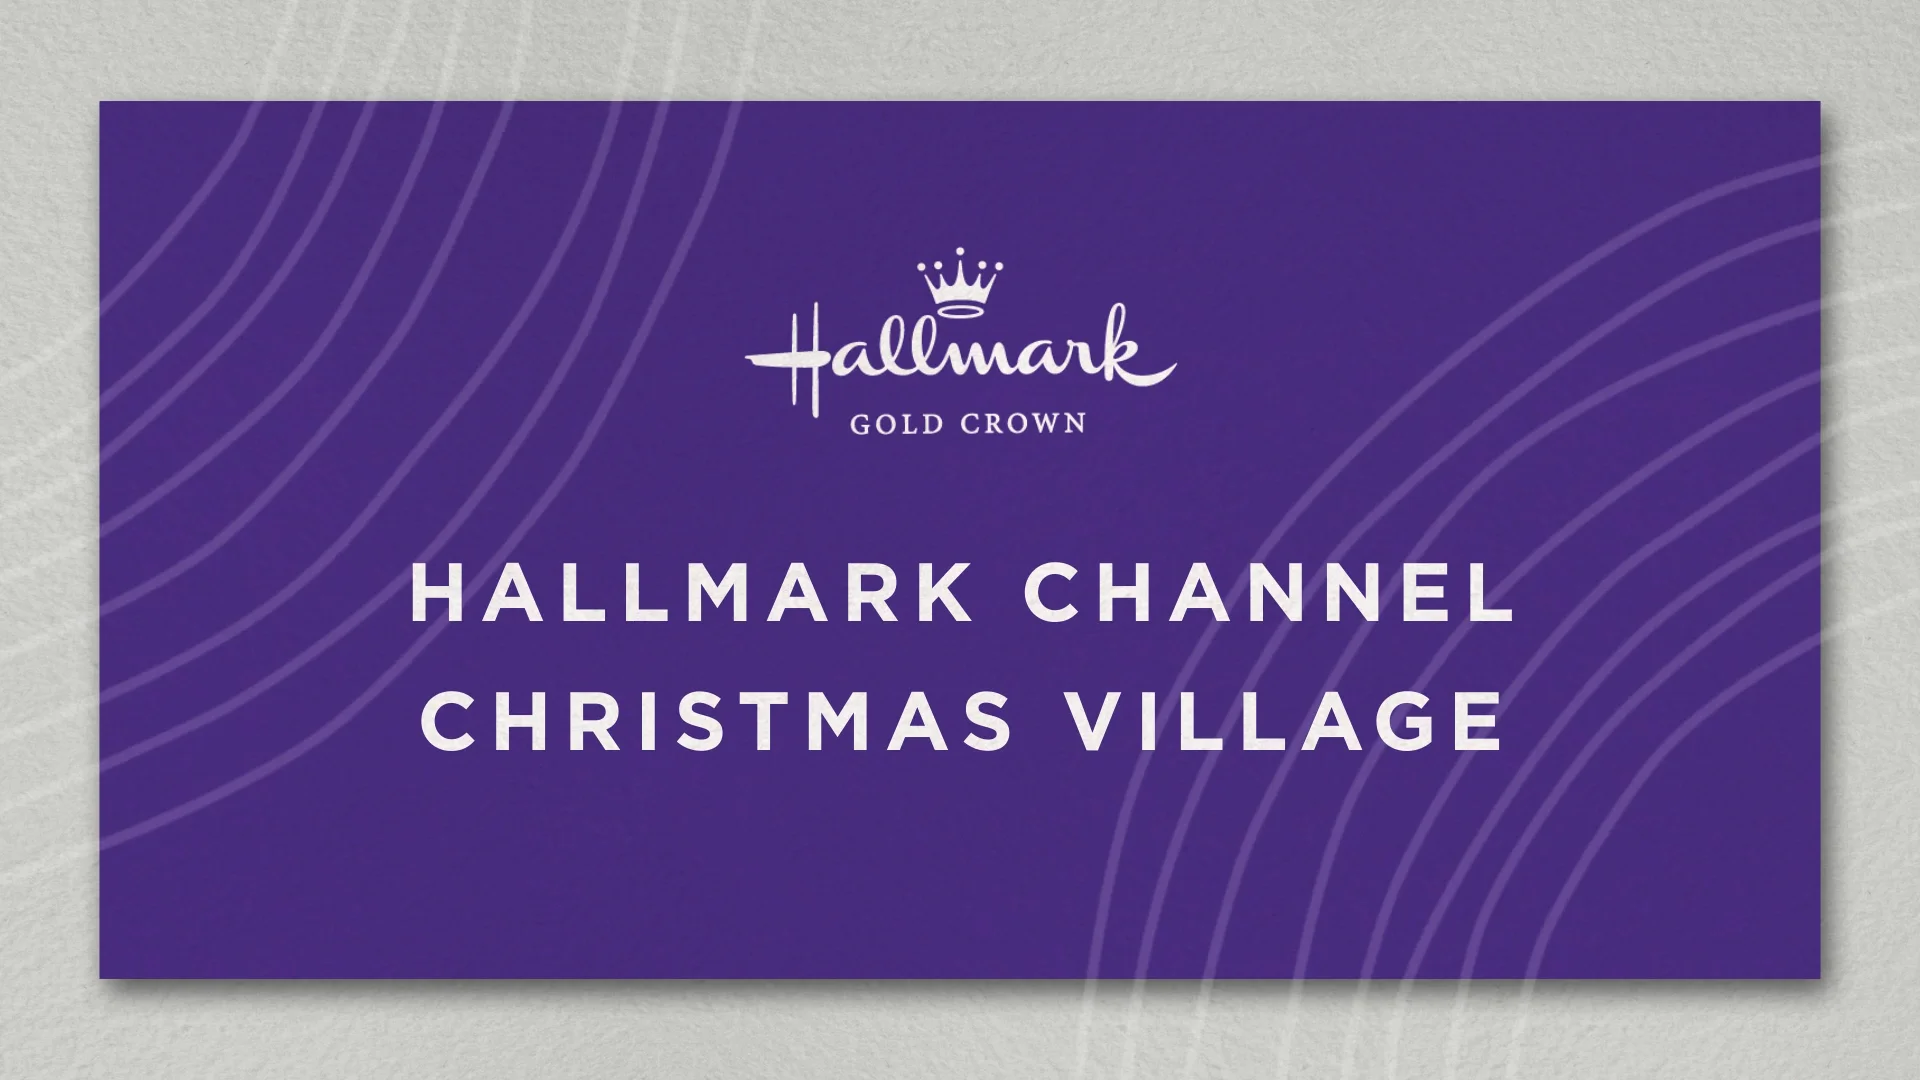 Hallmark Channel Christmas Village on Vimeo